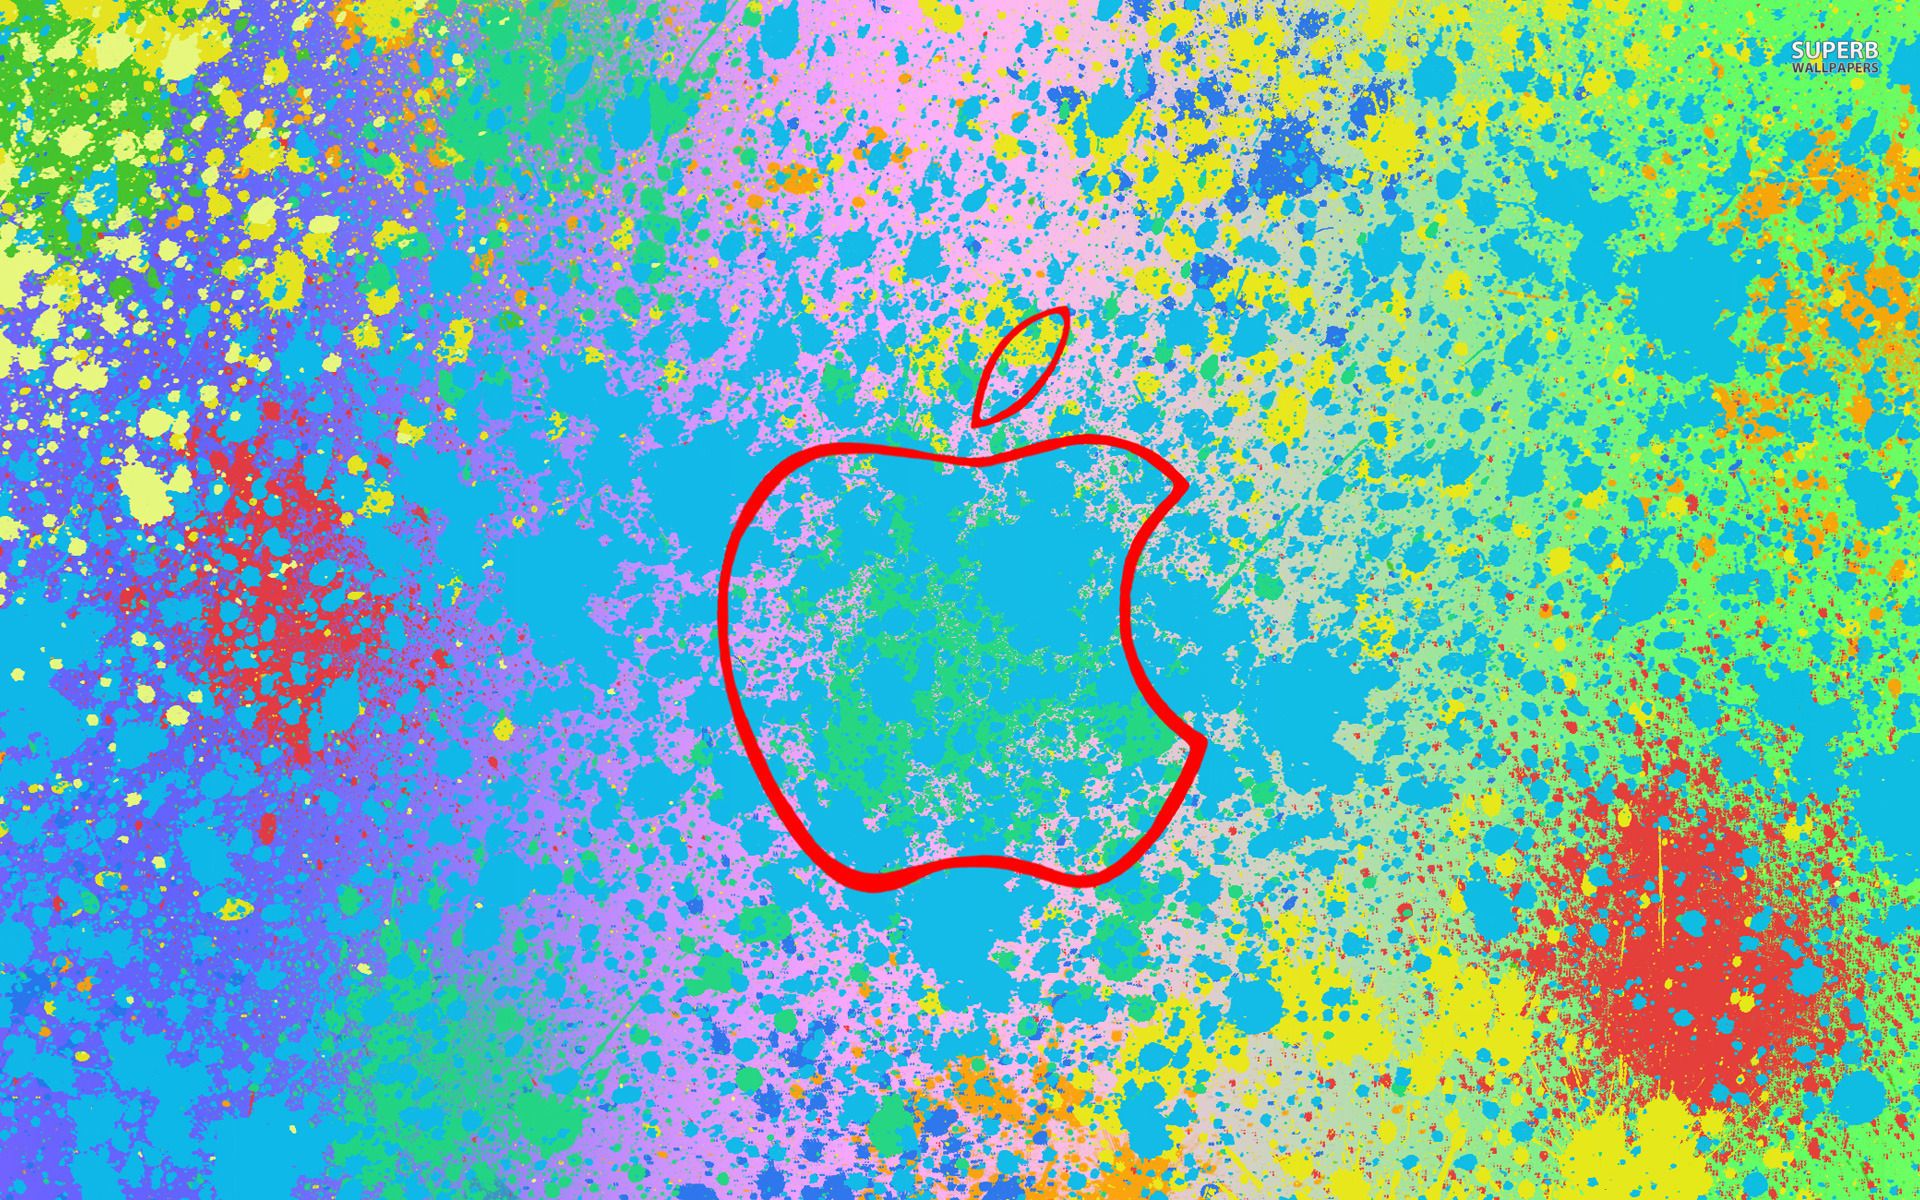 Apple logo wallpaper - Computer wallpapers - #25976